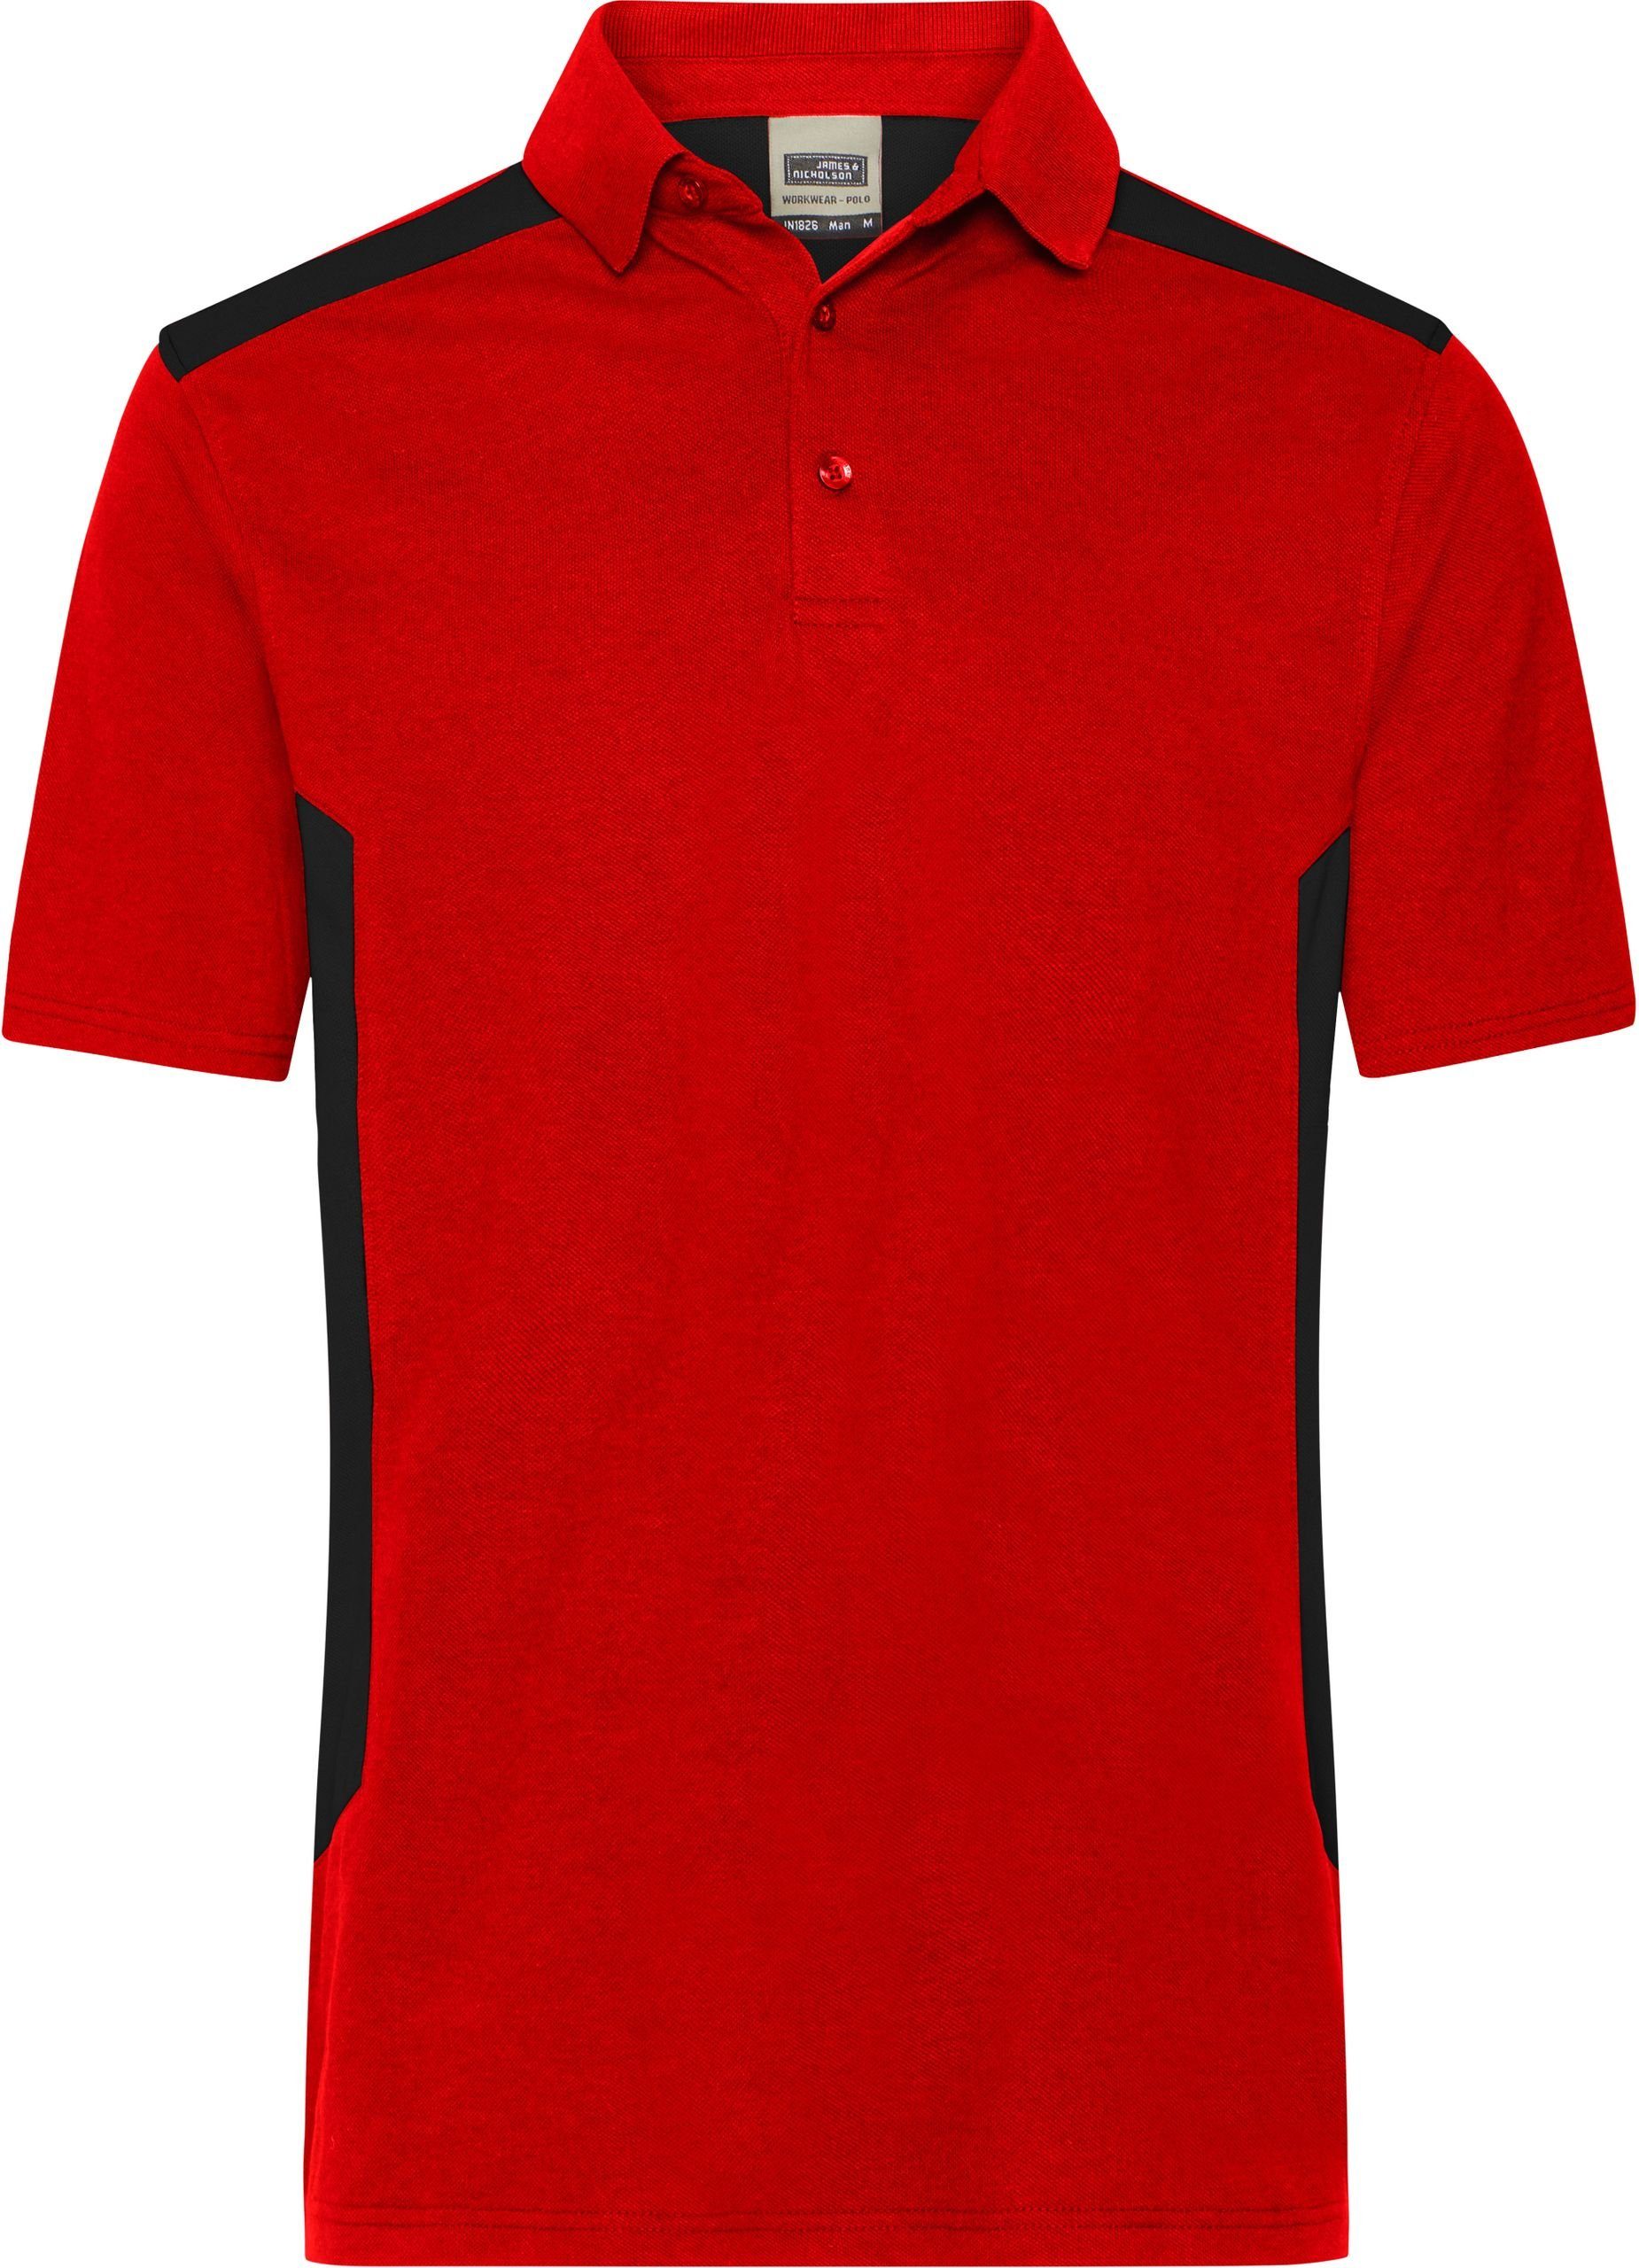 James & Nicholson Poloshirt Herren Workwear Polo - Strong RED/BLACK | Poloshirts